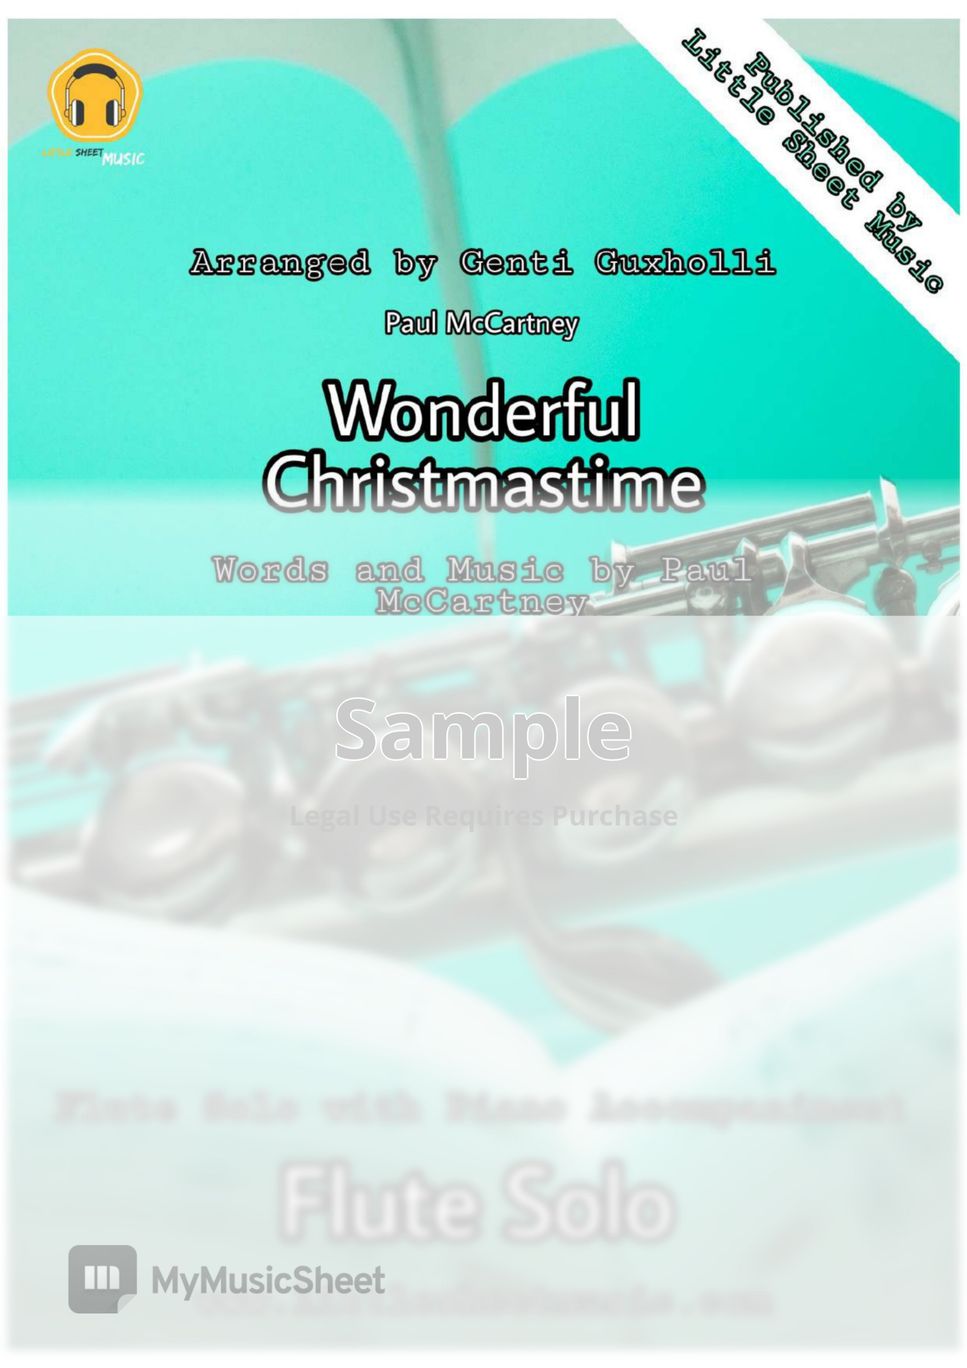 Paul McCartney - Wonderful Christmastime (Flute Solo with Piano Accompaniment) by Genti Guxholli